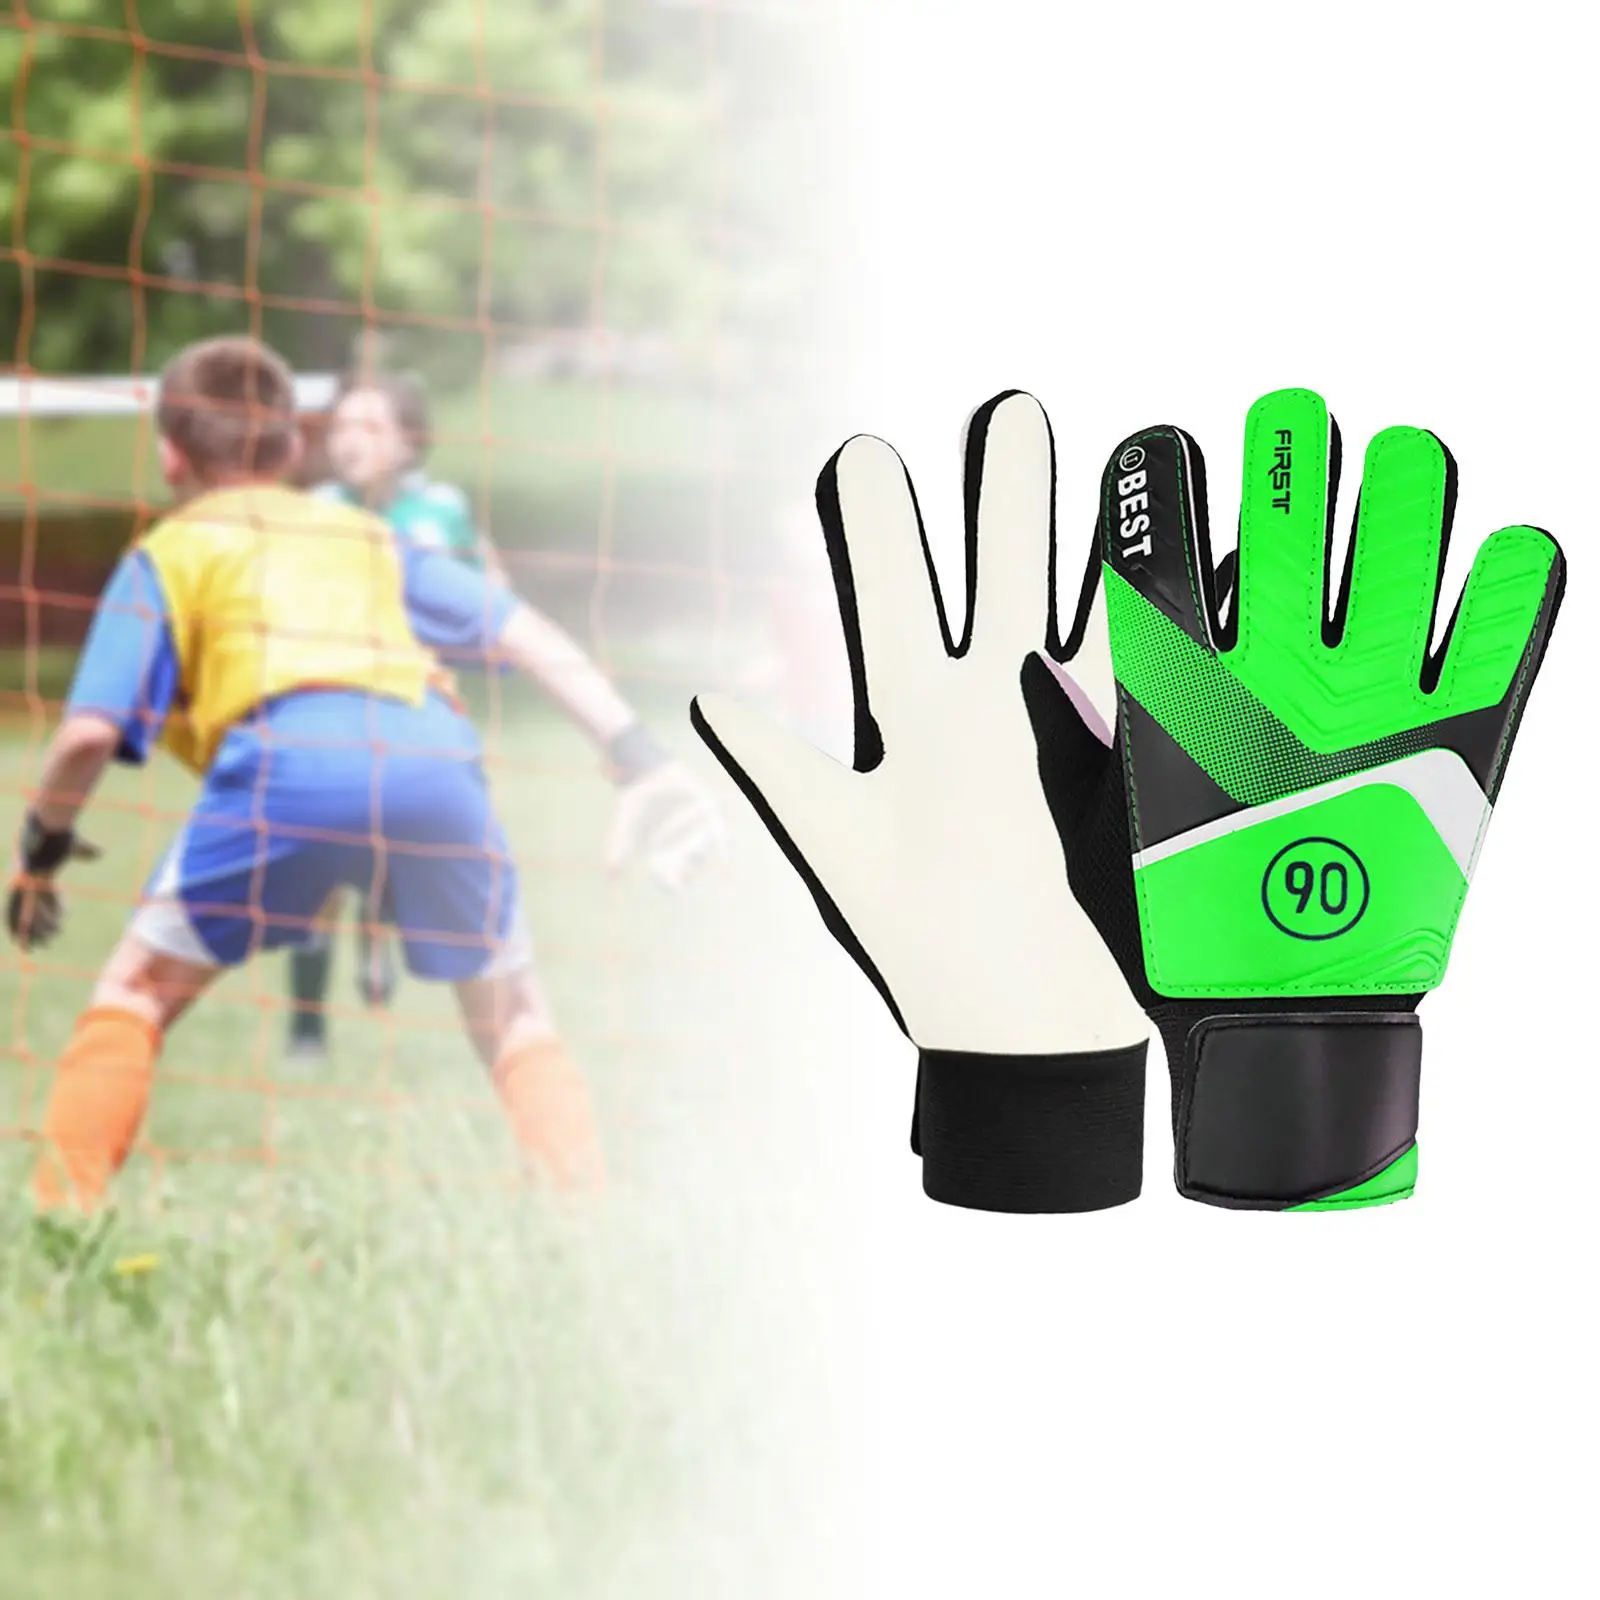 Football Goalkeeper Gloves High Performance Nonslip Anticollision Comfortable Training Strong Grip Breathable for Boys Girls